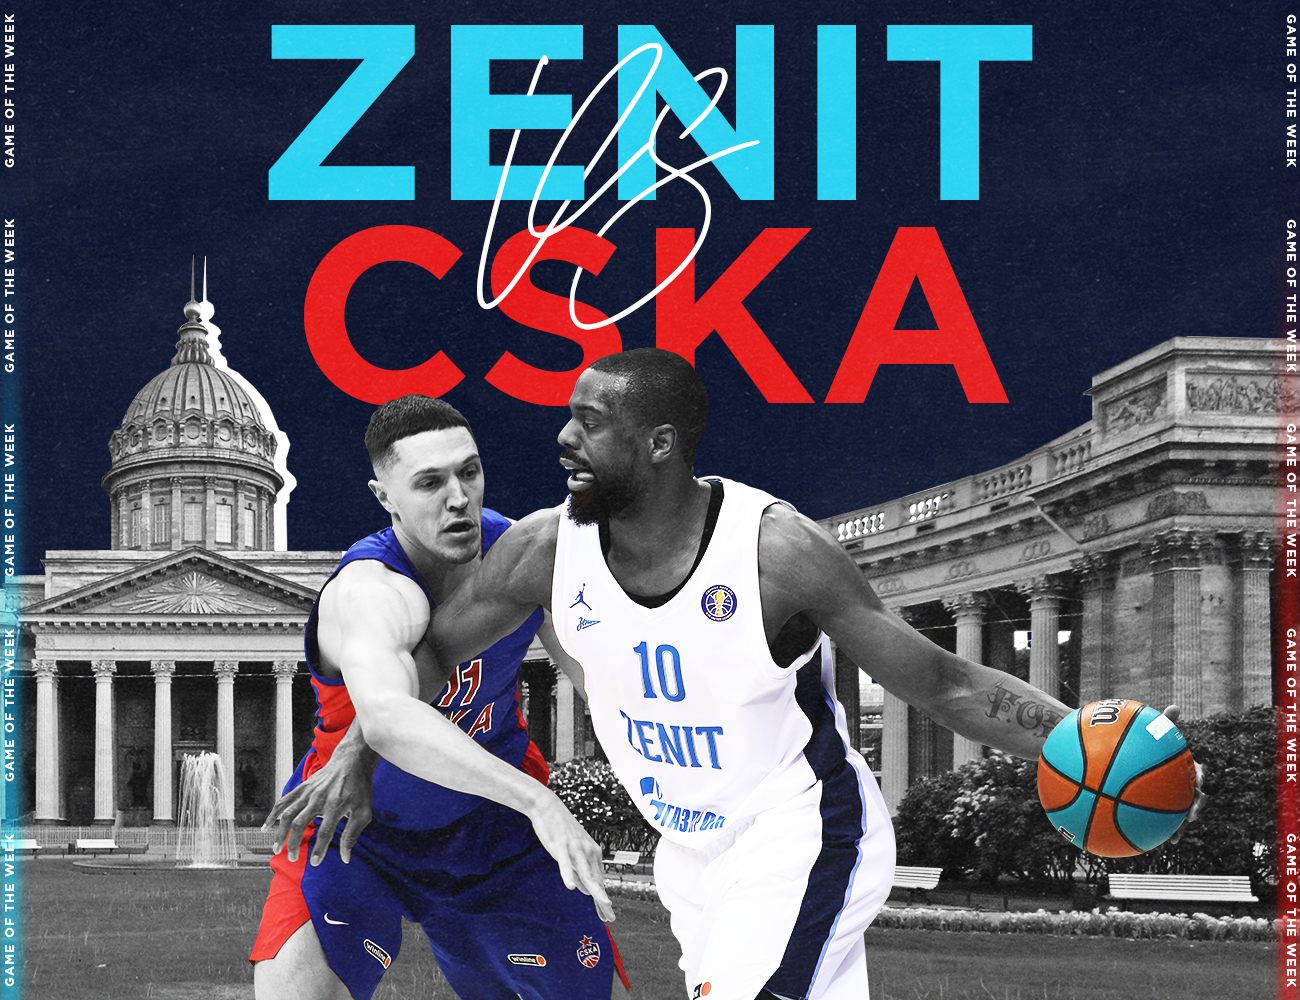 Game of the Week. Zenit vs CSKA